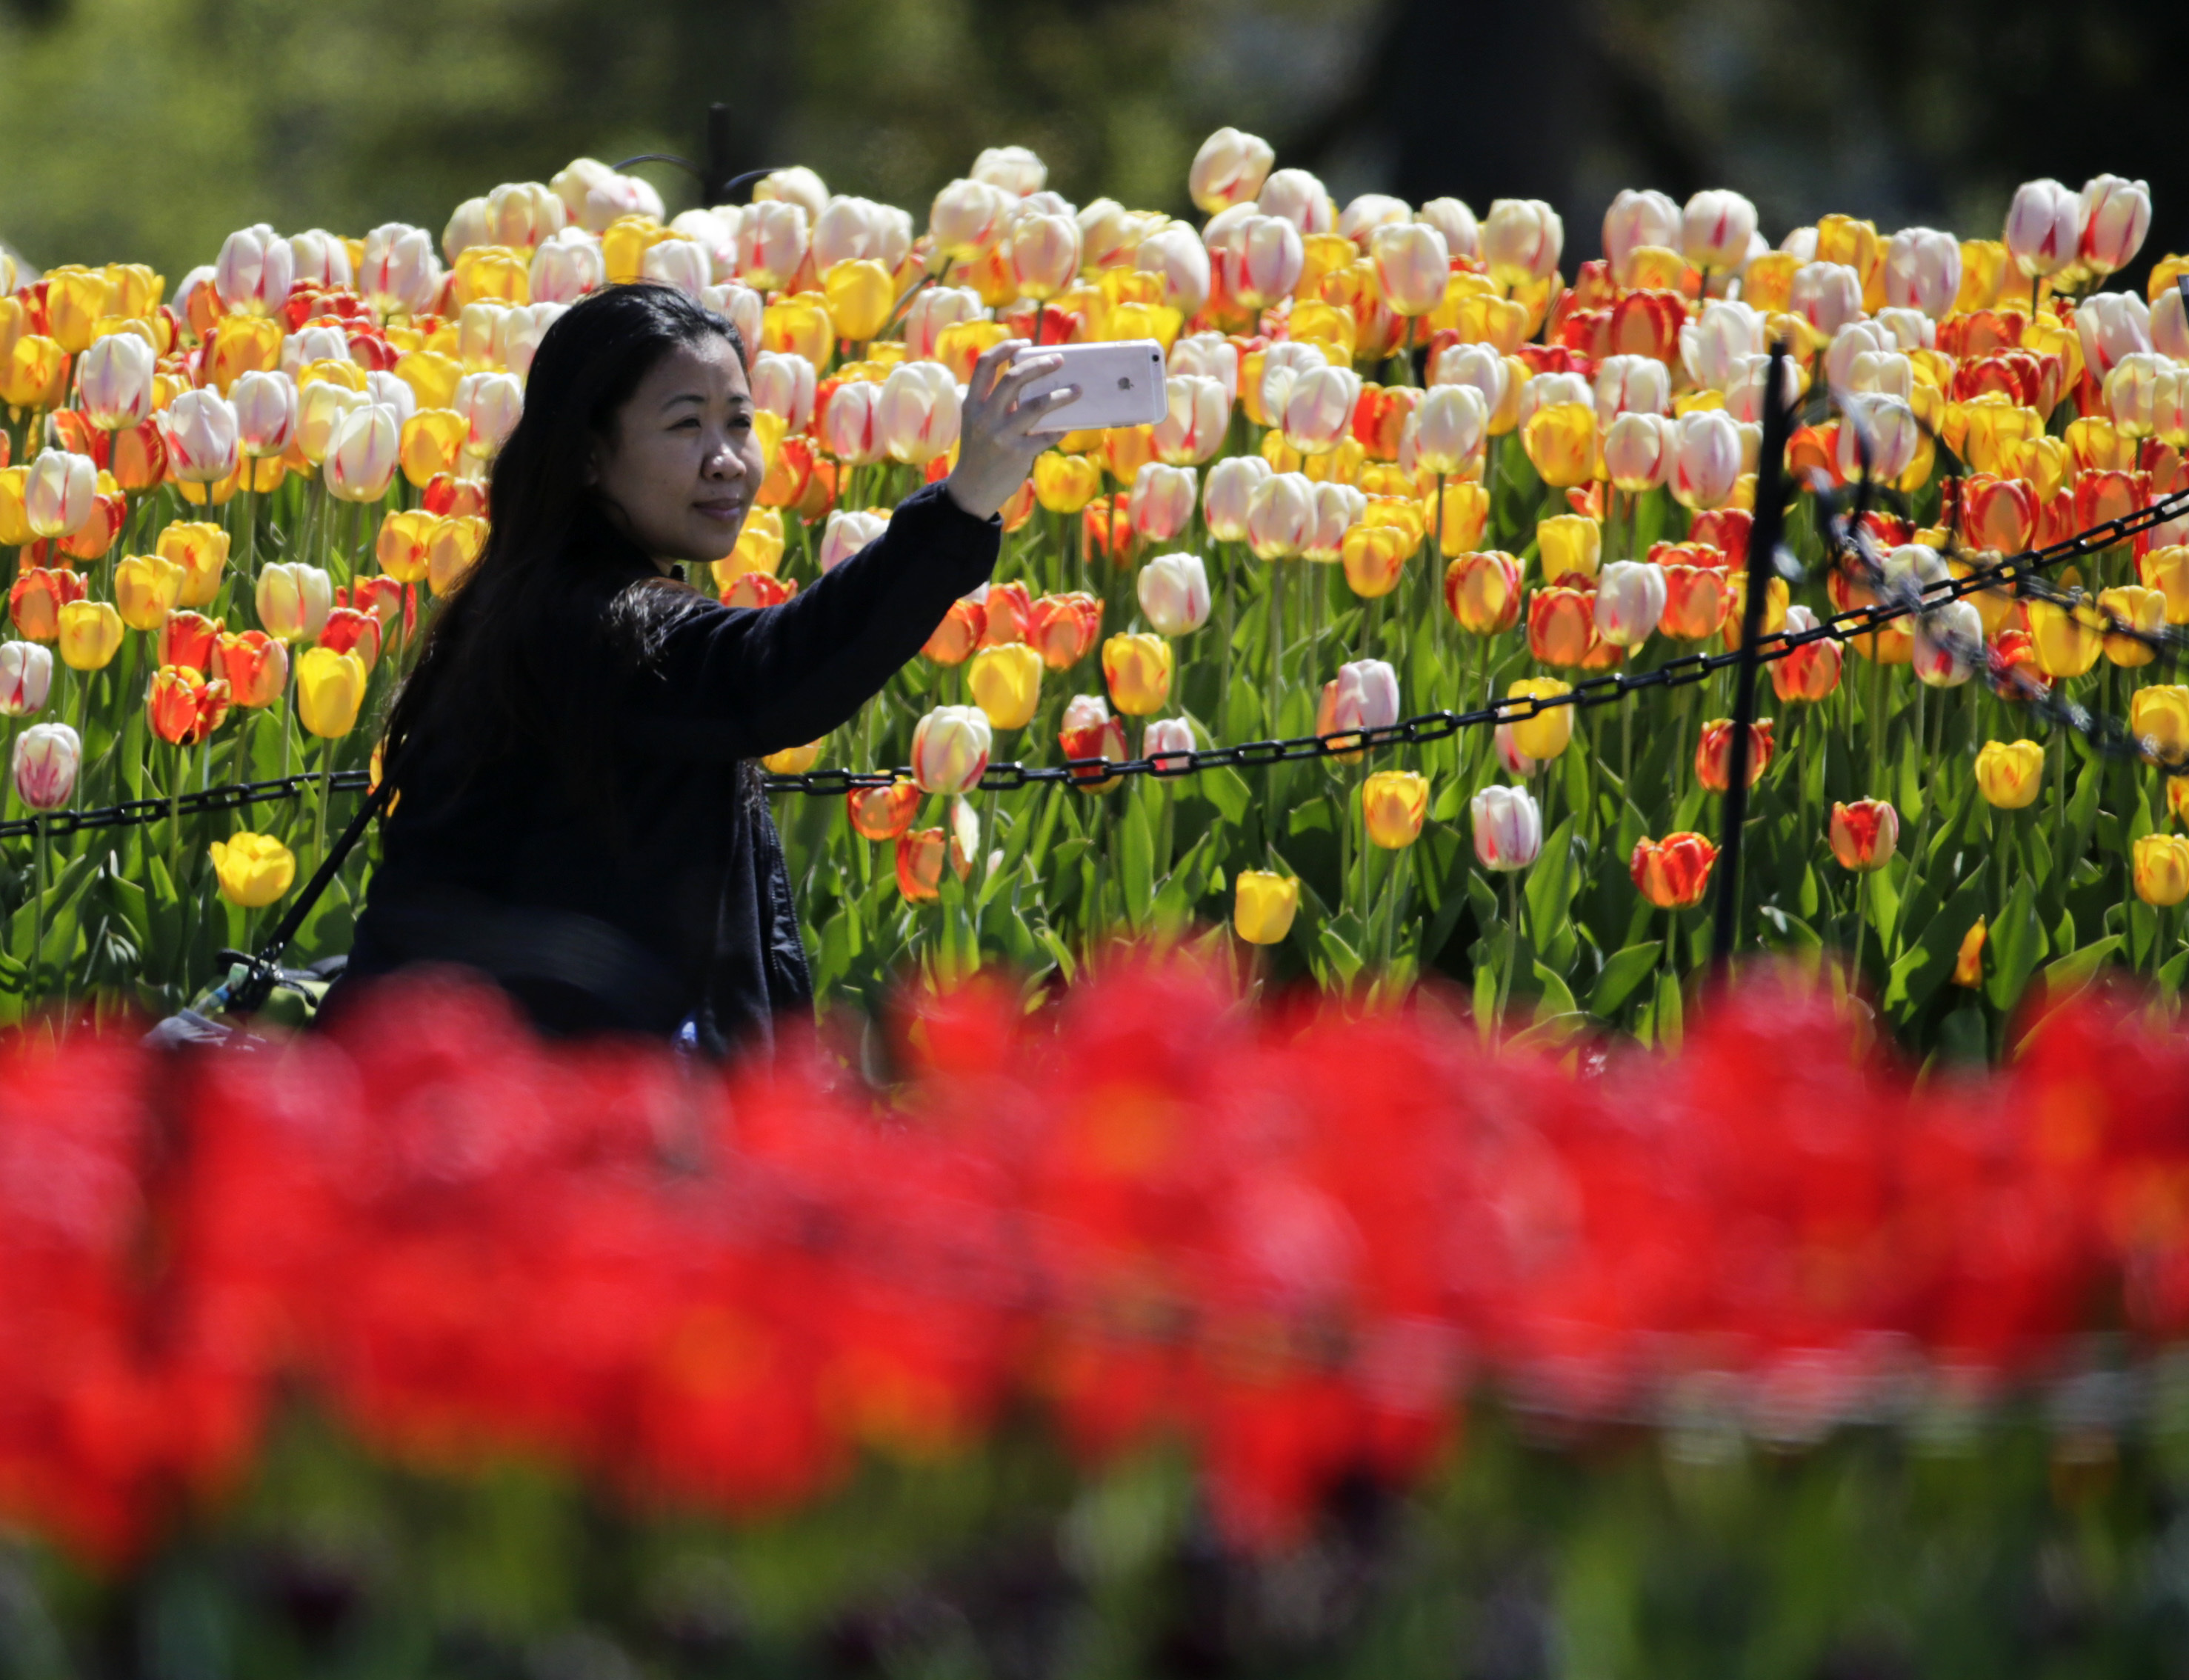 A woman walks through a field of tulips